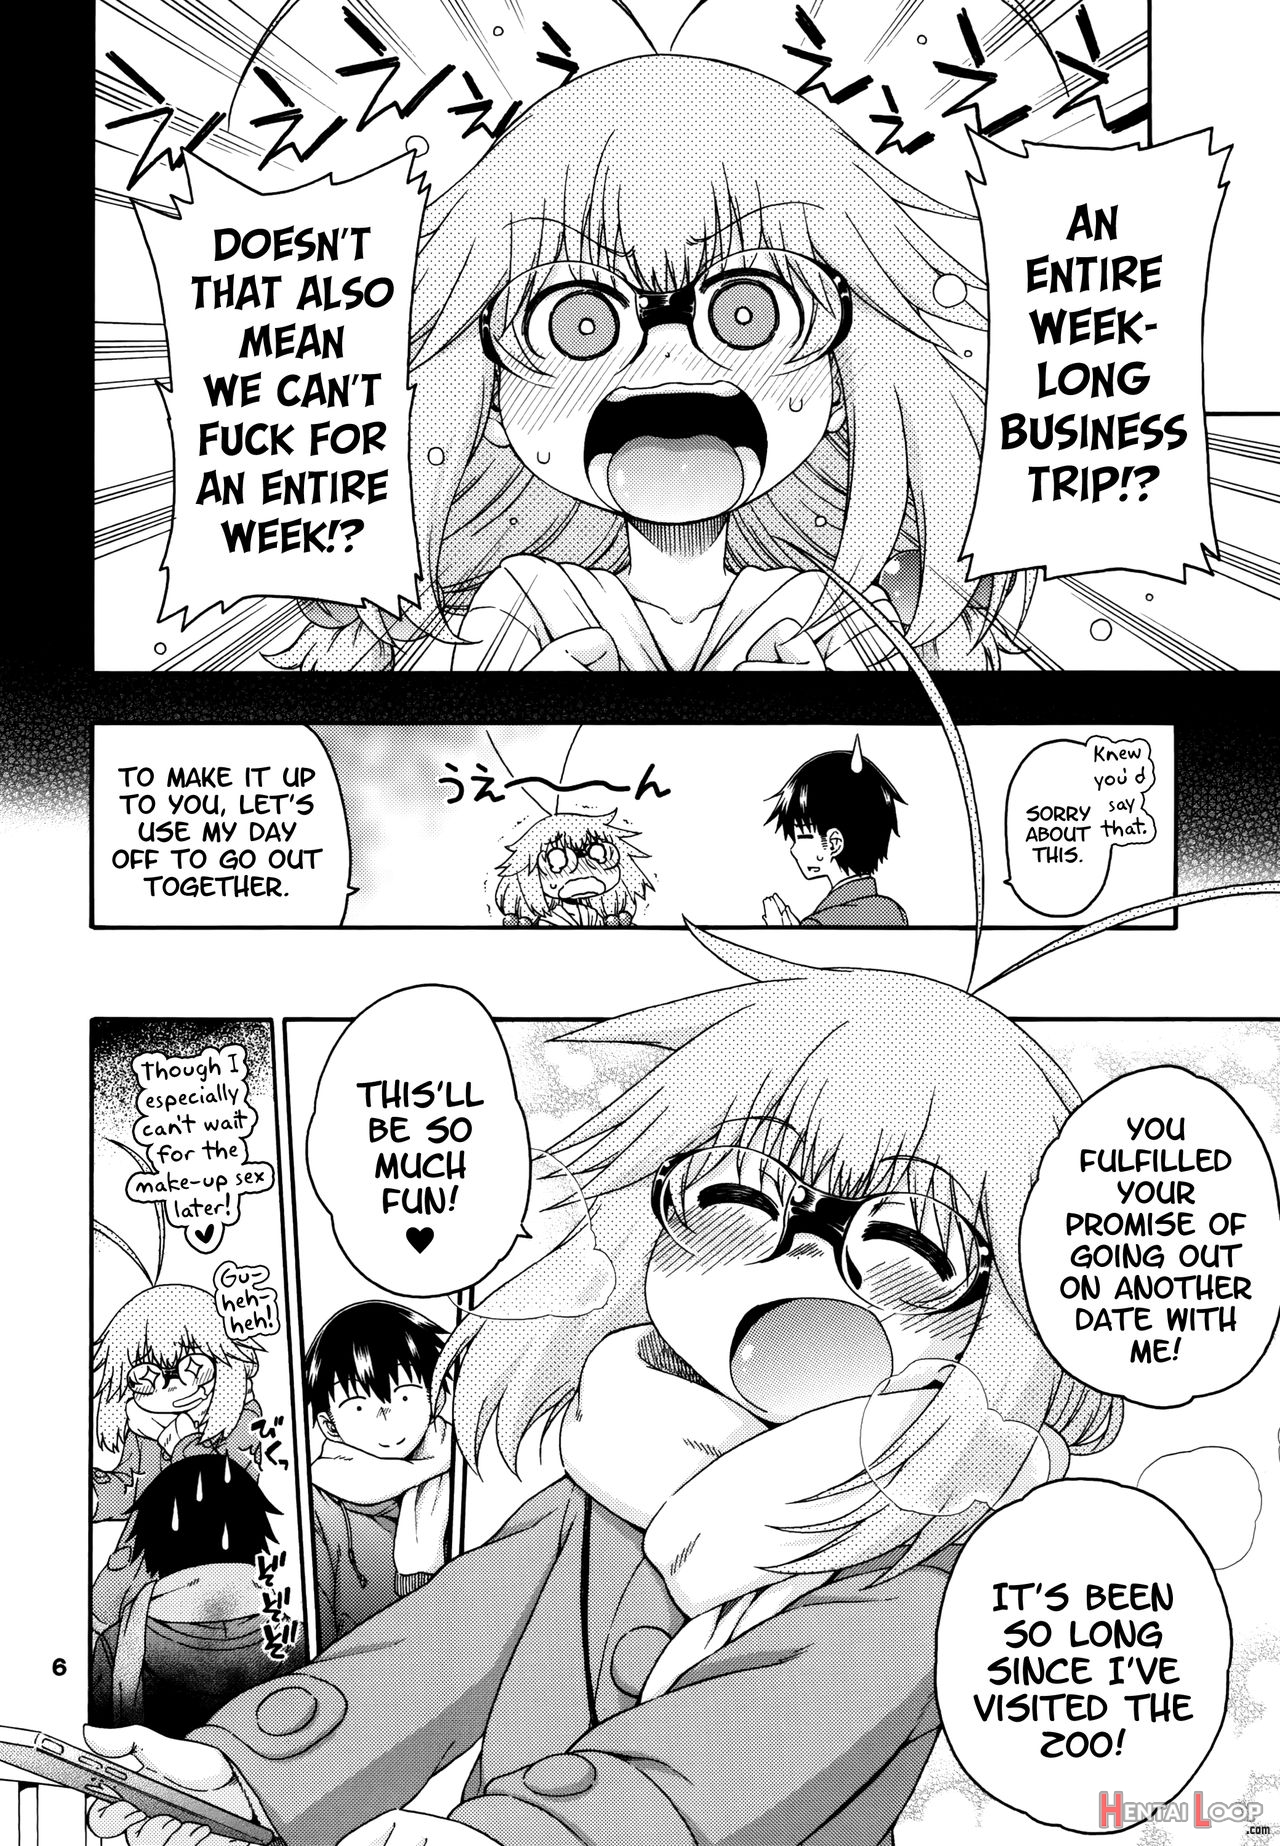 Nightcrawler Inko-chan S5 page 6